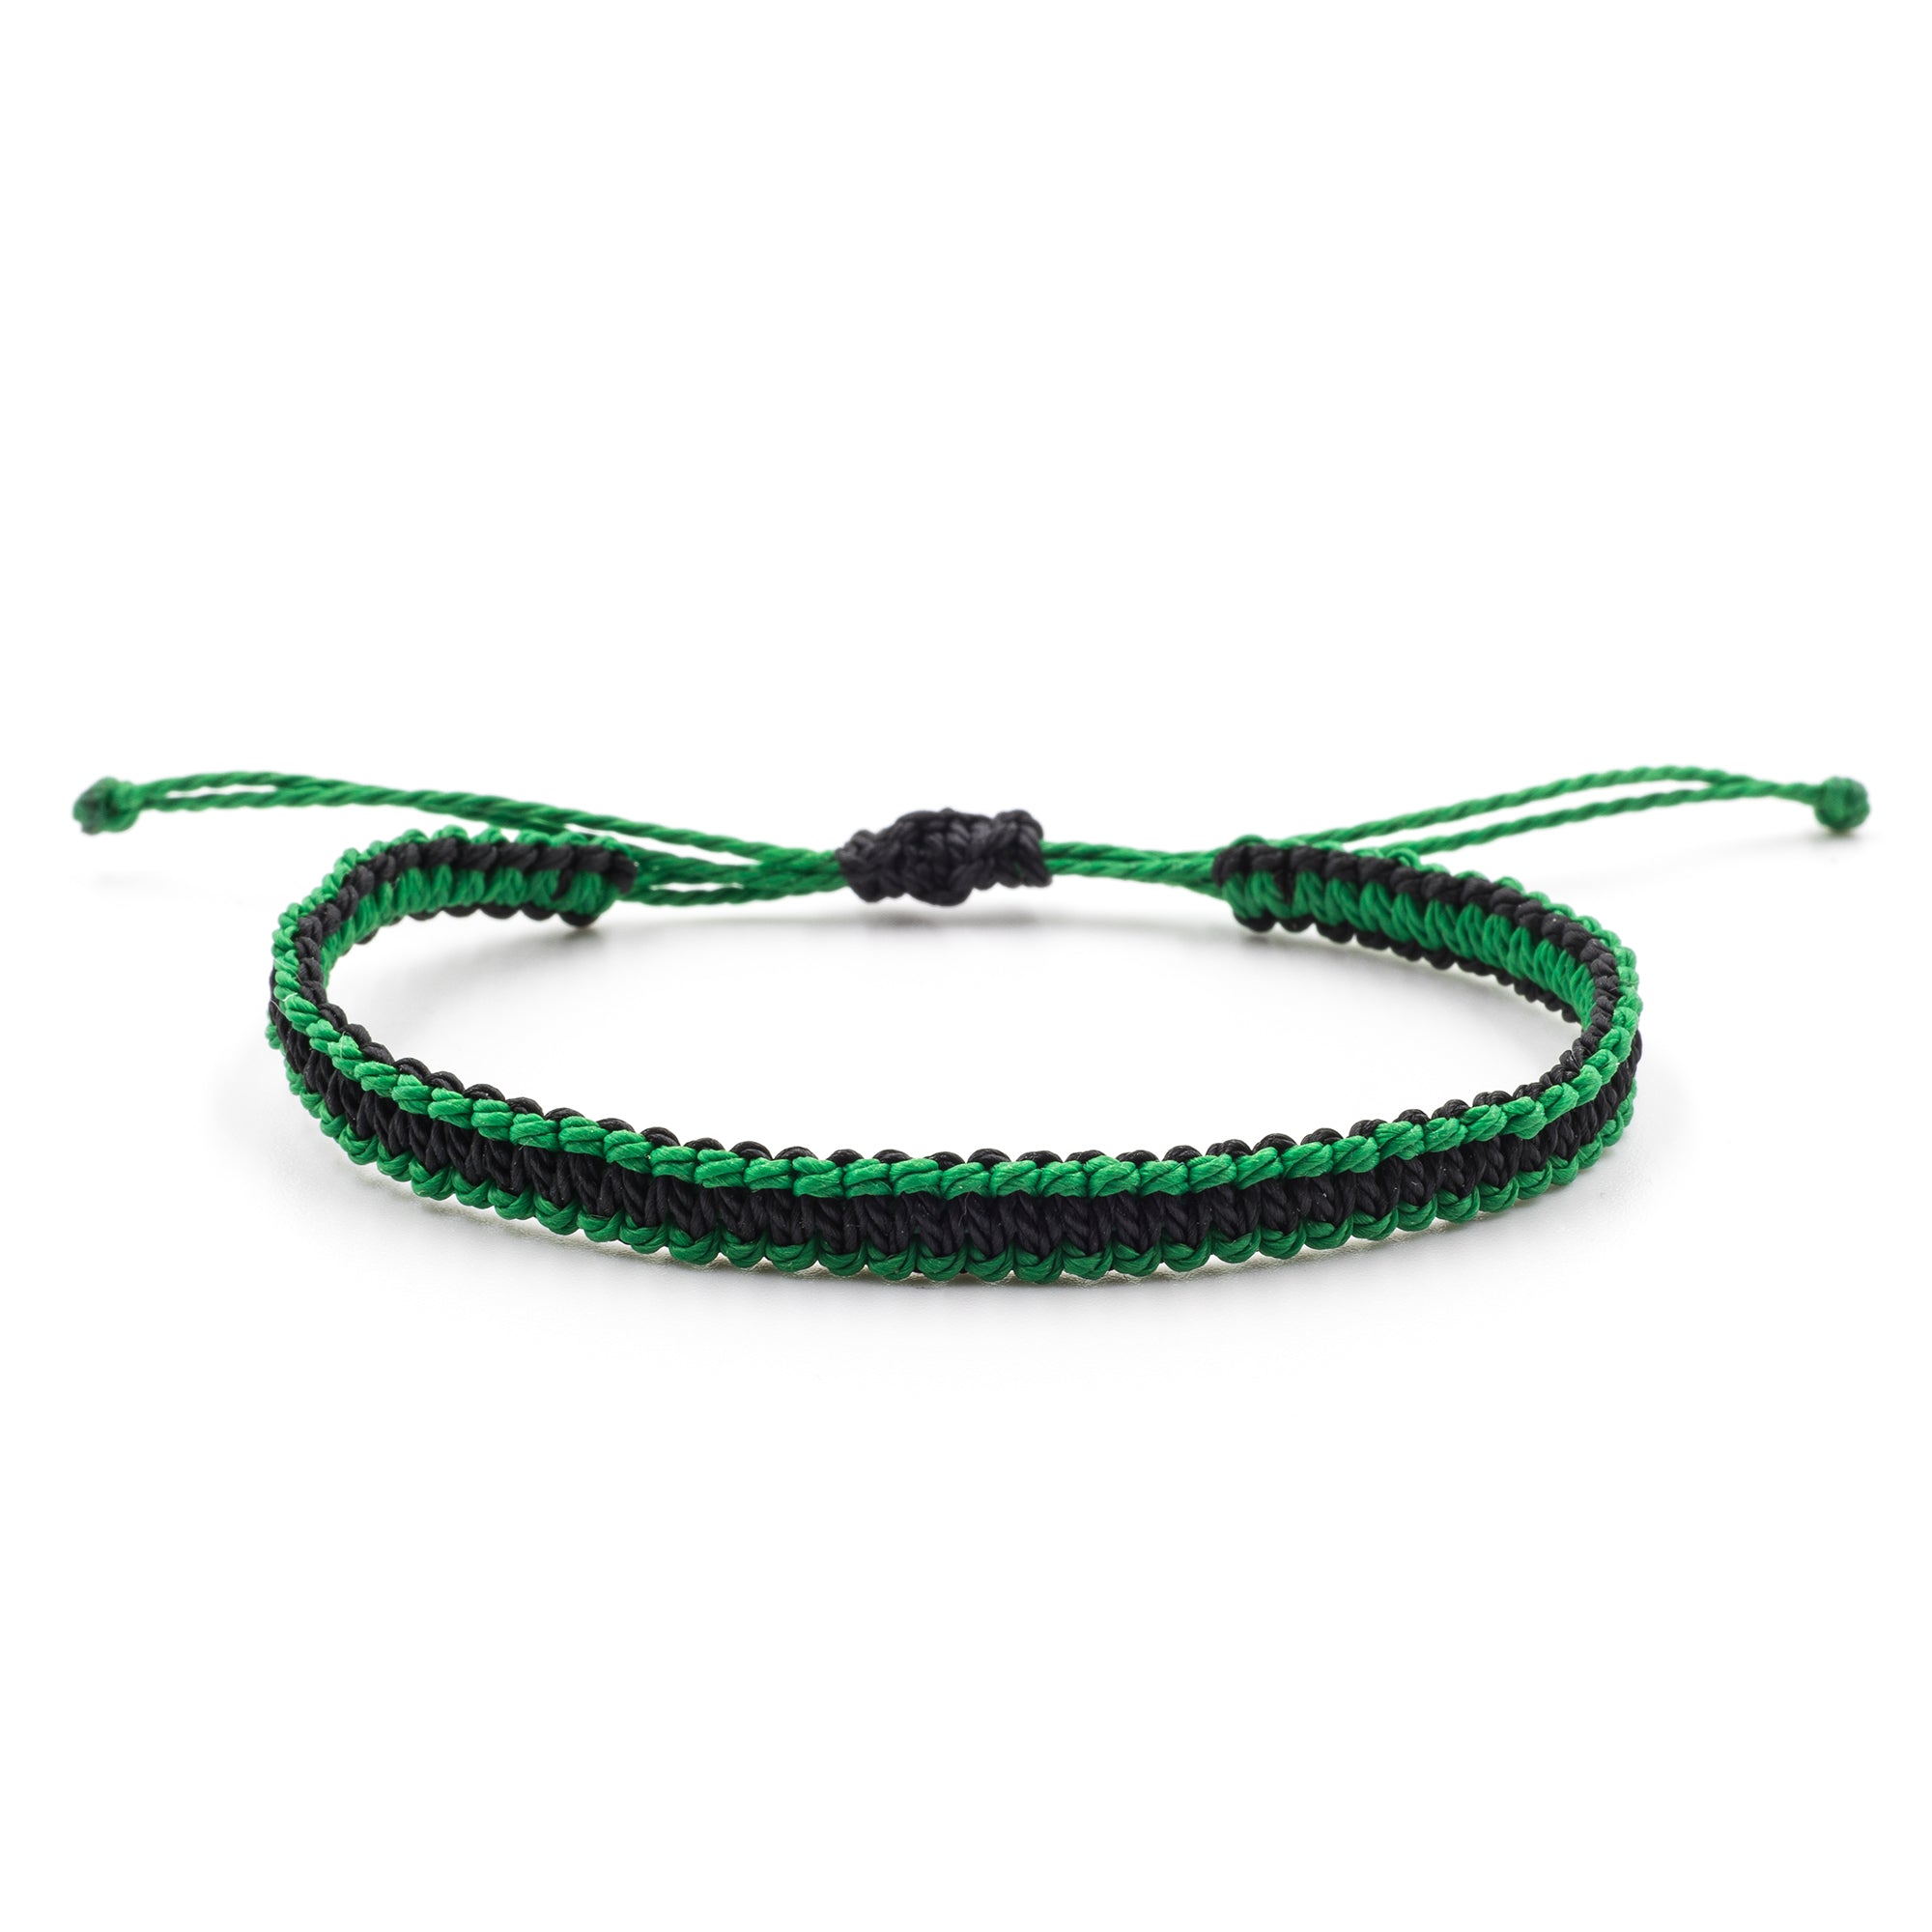 Tree bracelet green, black